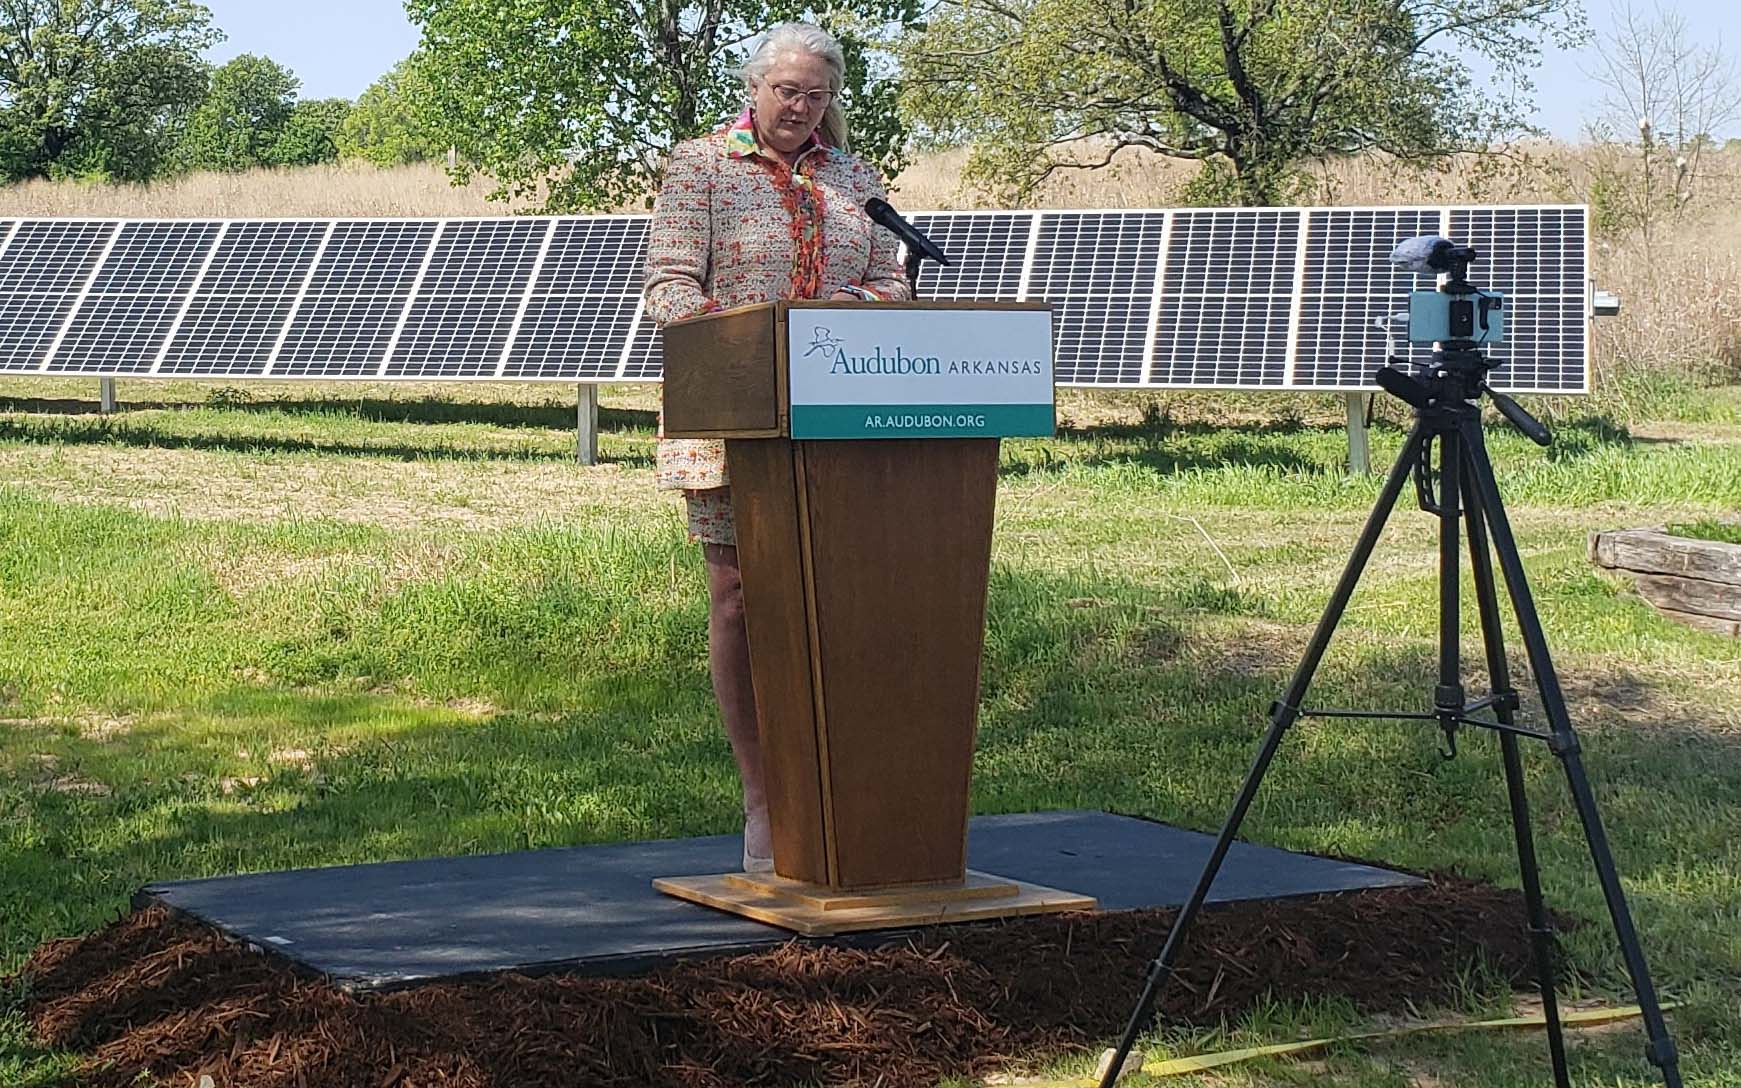  Anna Riggs, board chair of Audubon Arkansas, announces the completion of the Arkansas conservation group's new 35-kilowatt solar power plant.